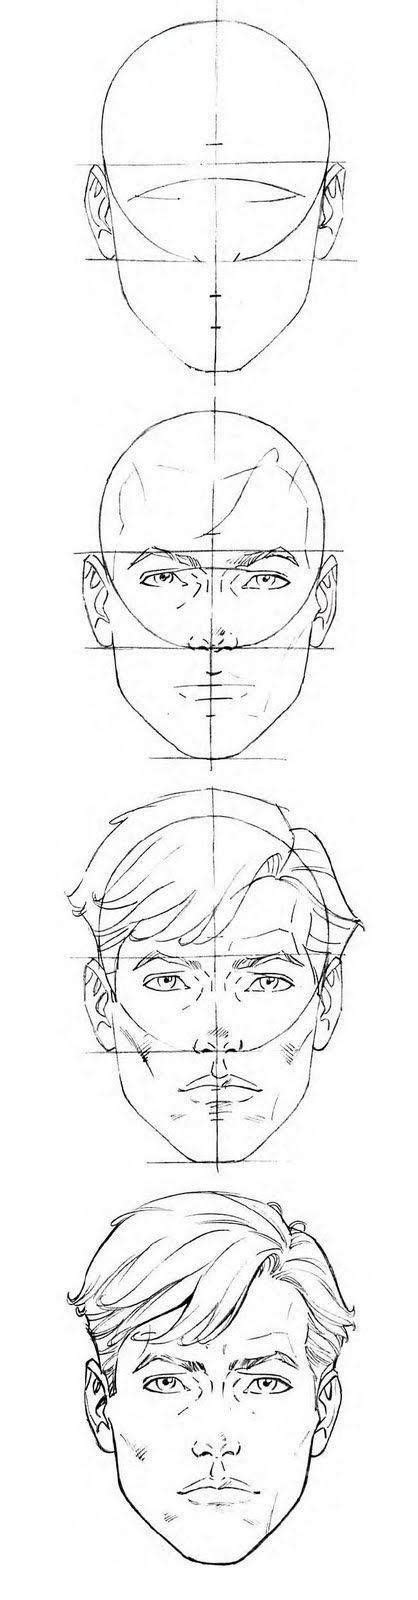 Saber Cómo Aprender A Dibujar Rostros O Caras De Humanos Paso A Paso Es